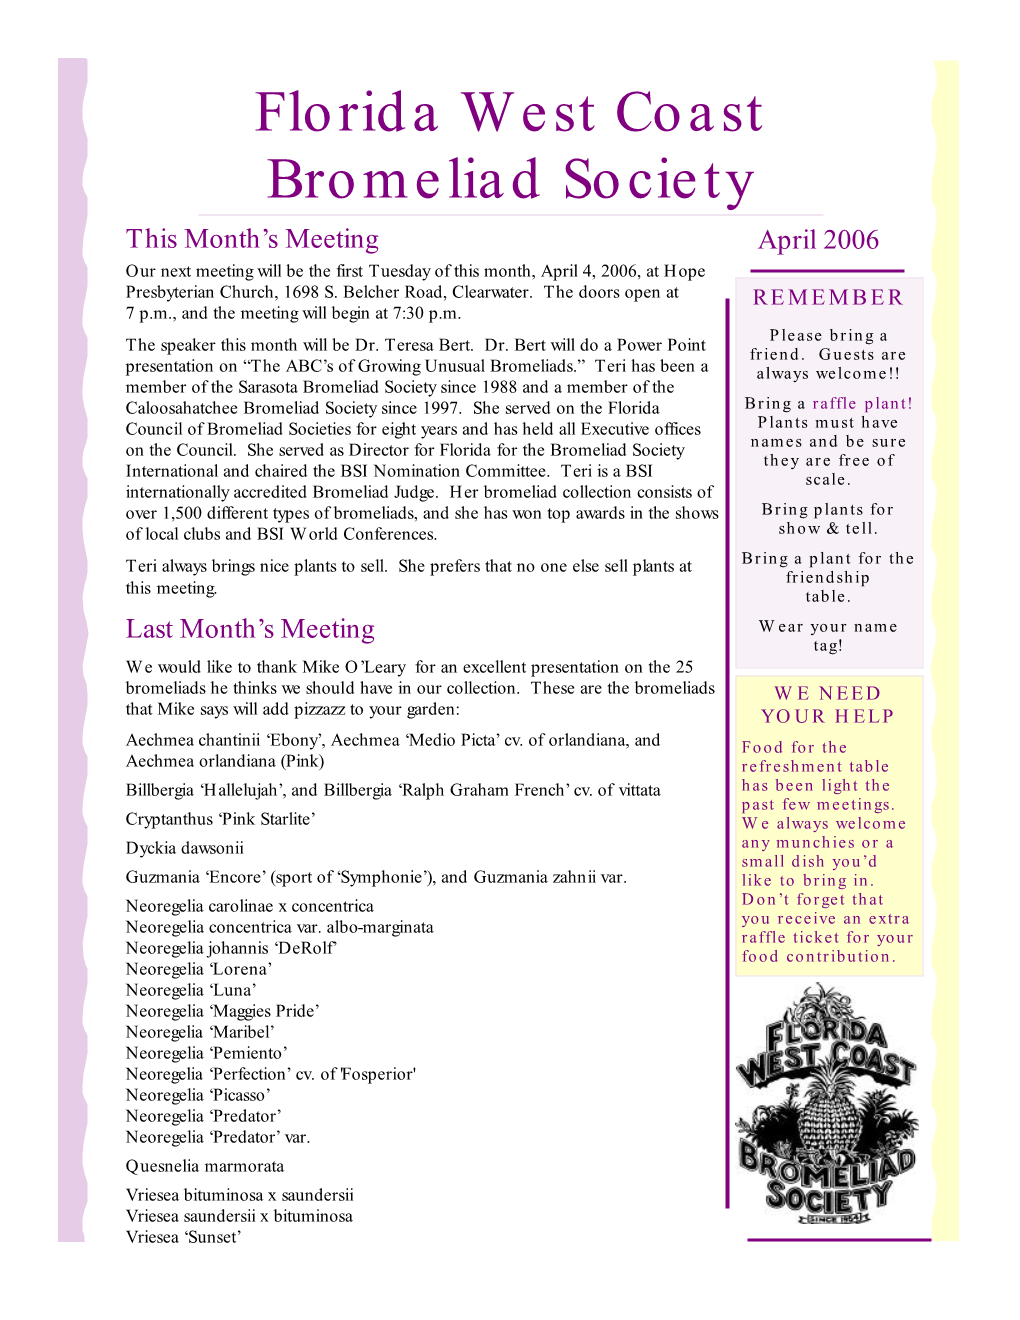 Florida West Coast Bromeliad Society